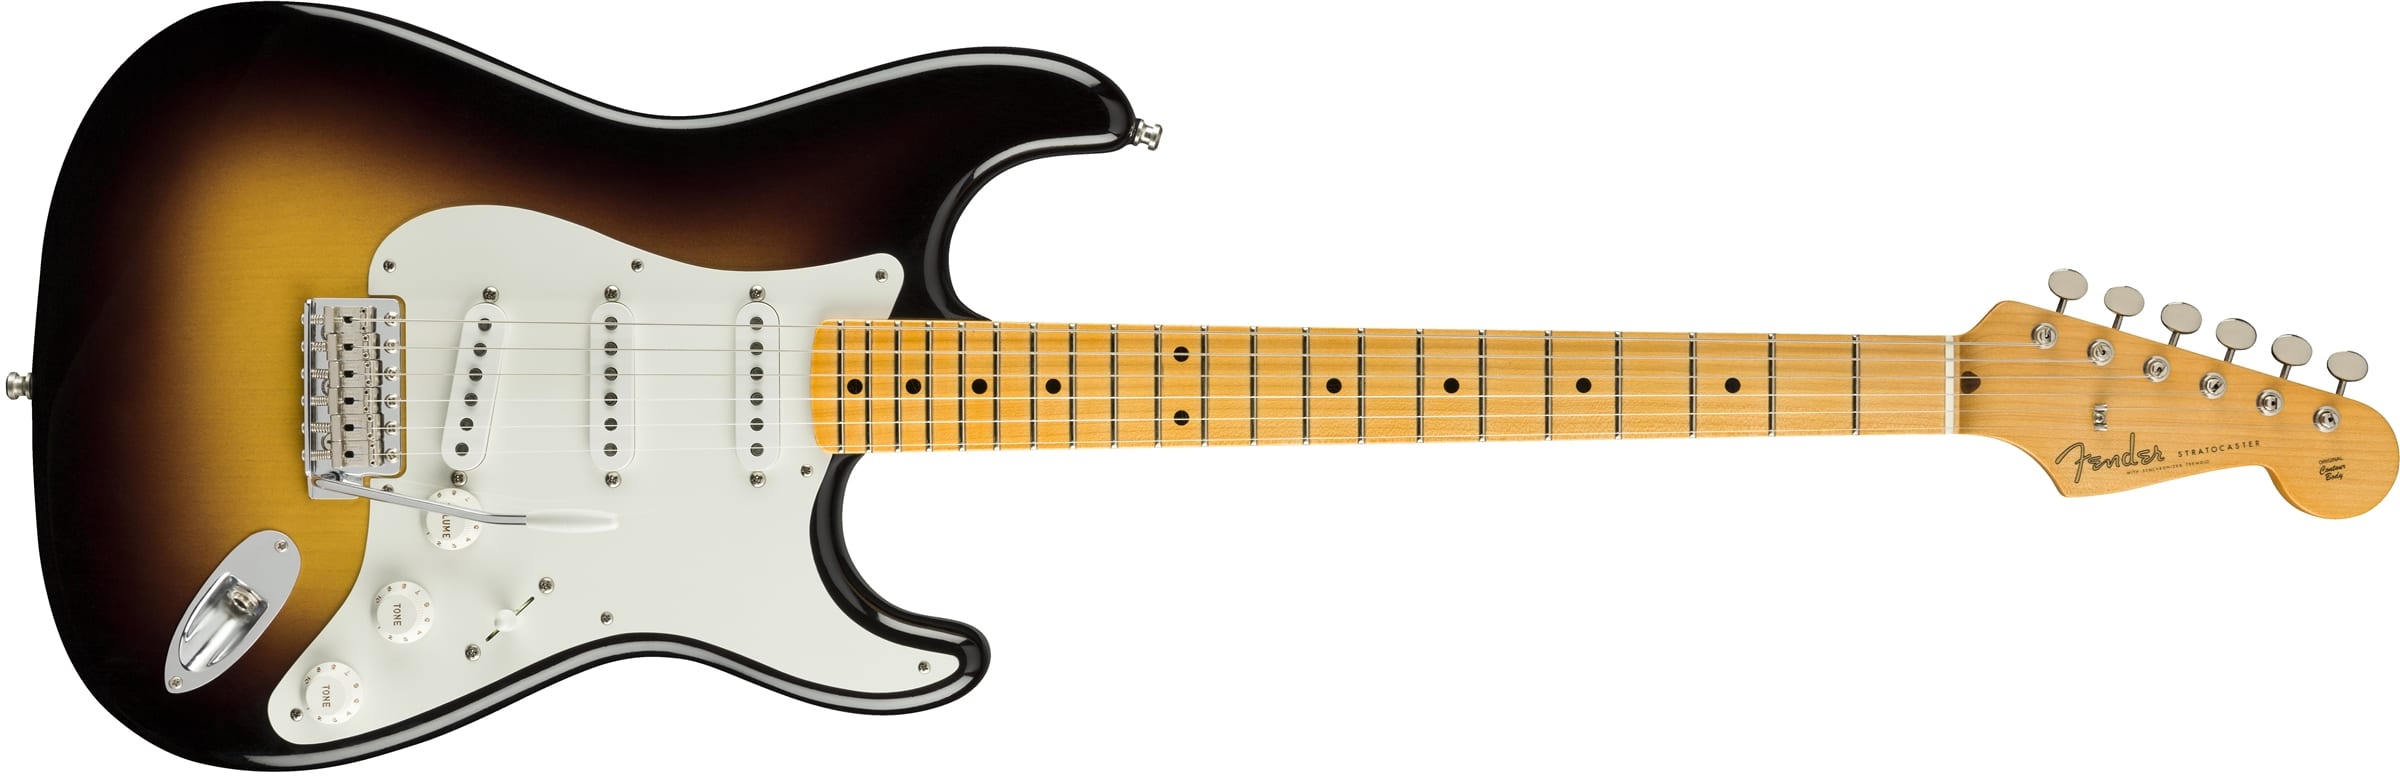 Fender Custom Shop Jimmie Vaughan Stratocaster in Sunburst